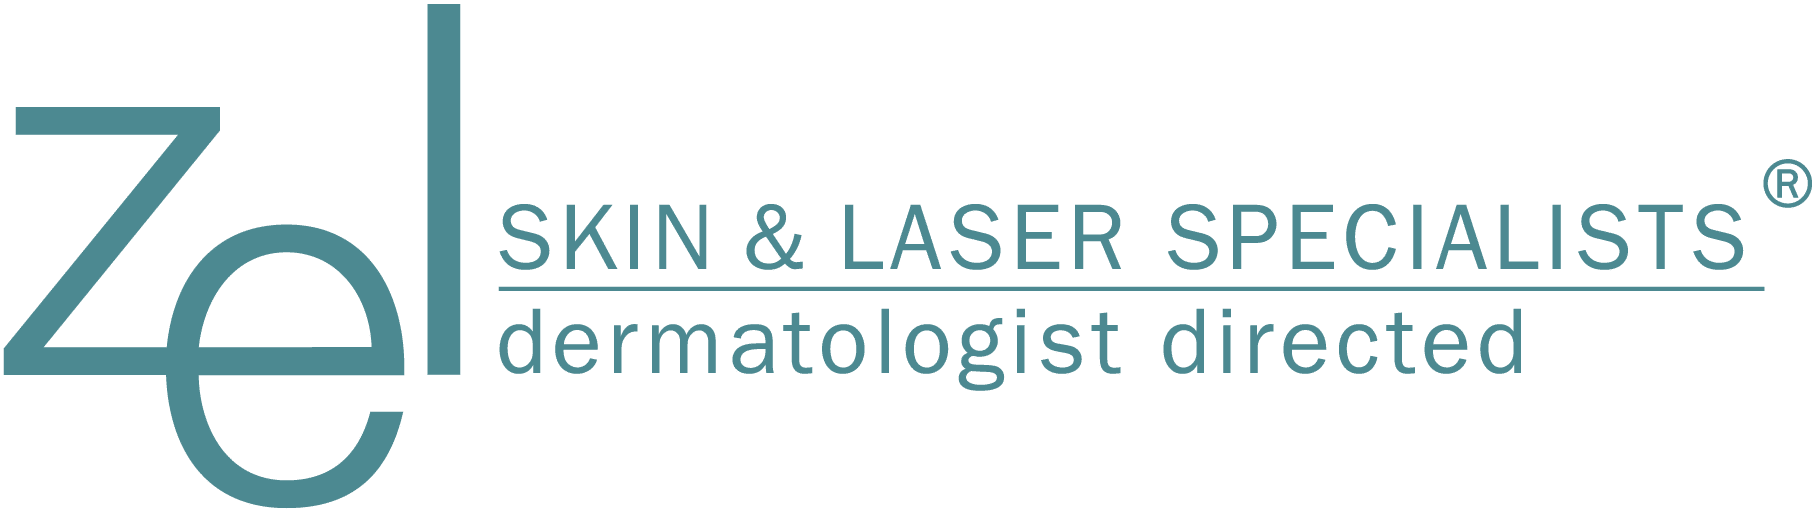 Fractional (Fraxel) Laser Skin Treatment in MN | Zelskin.com